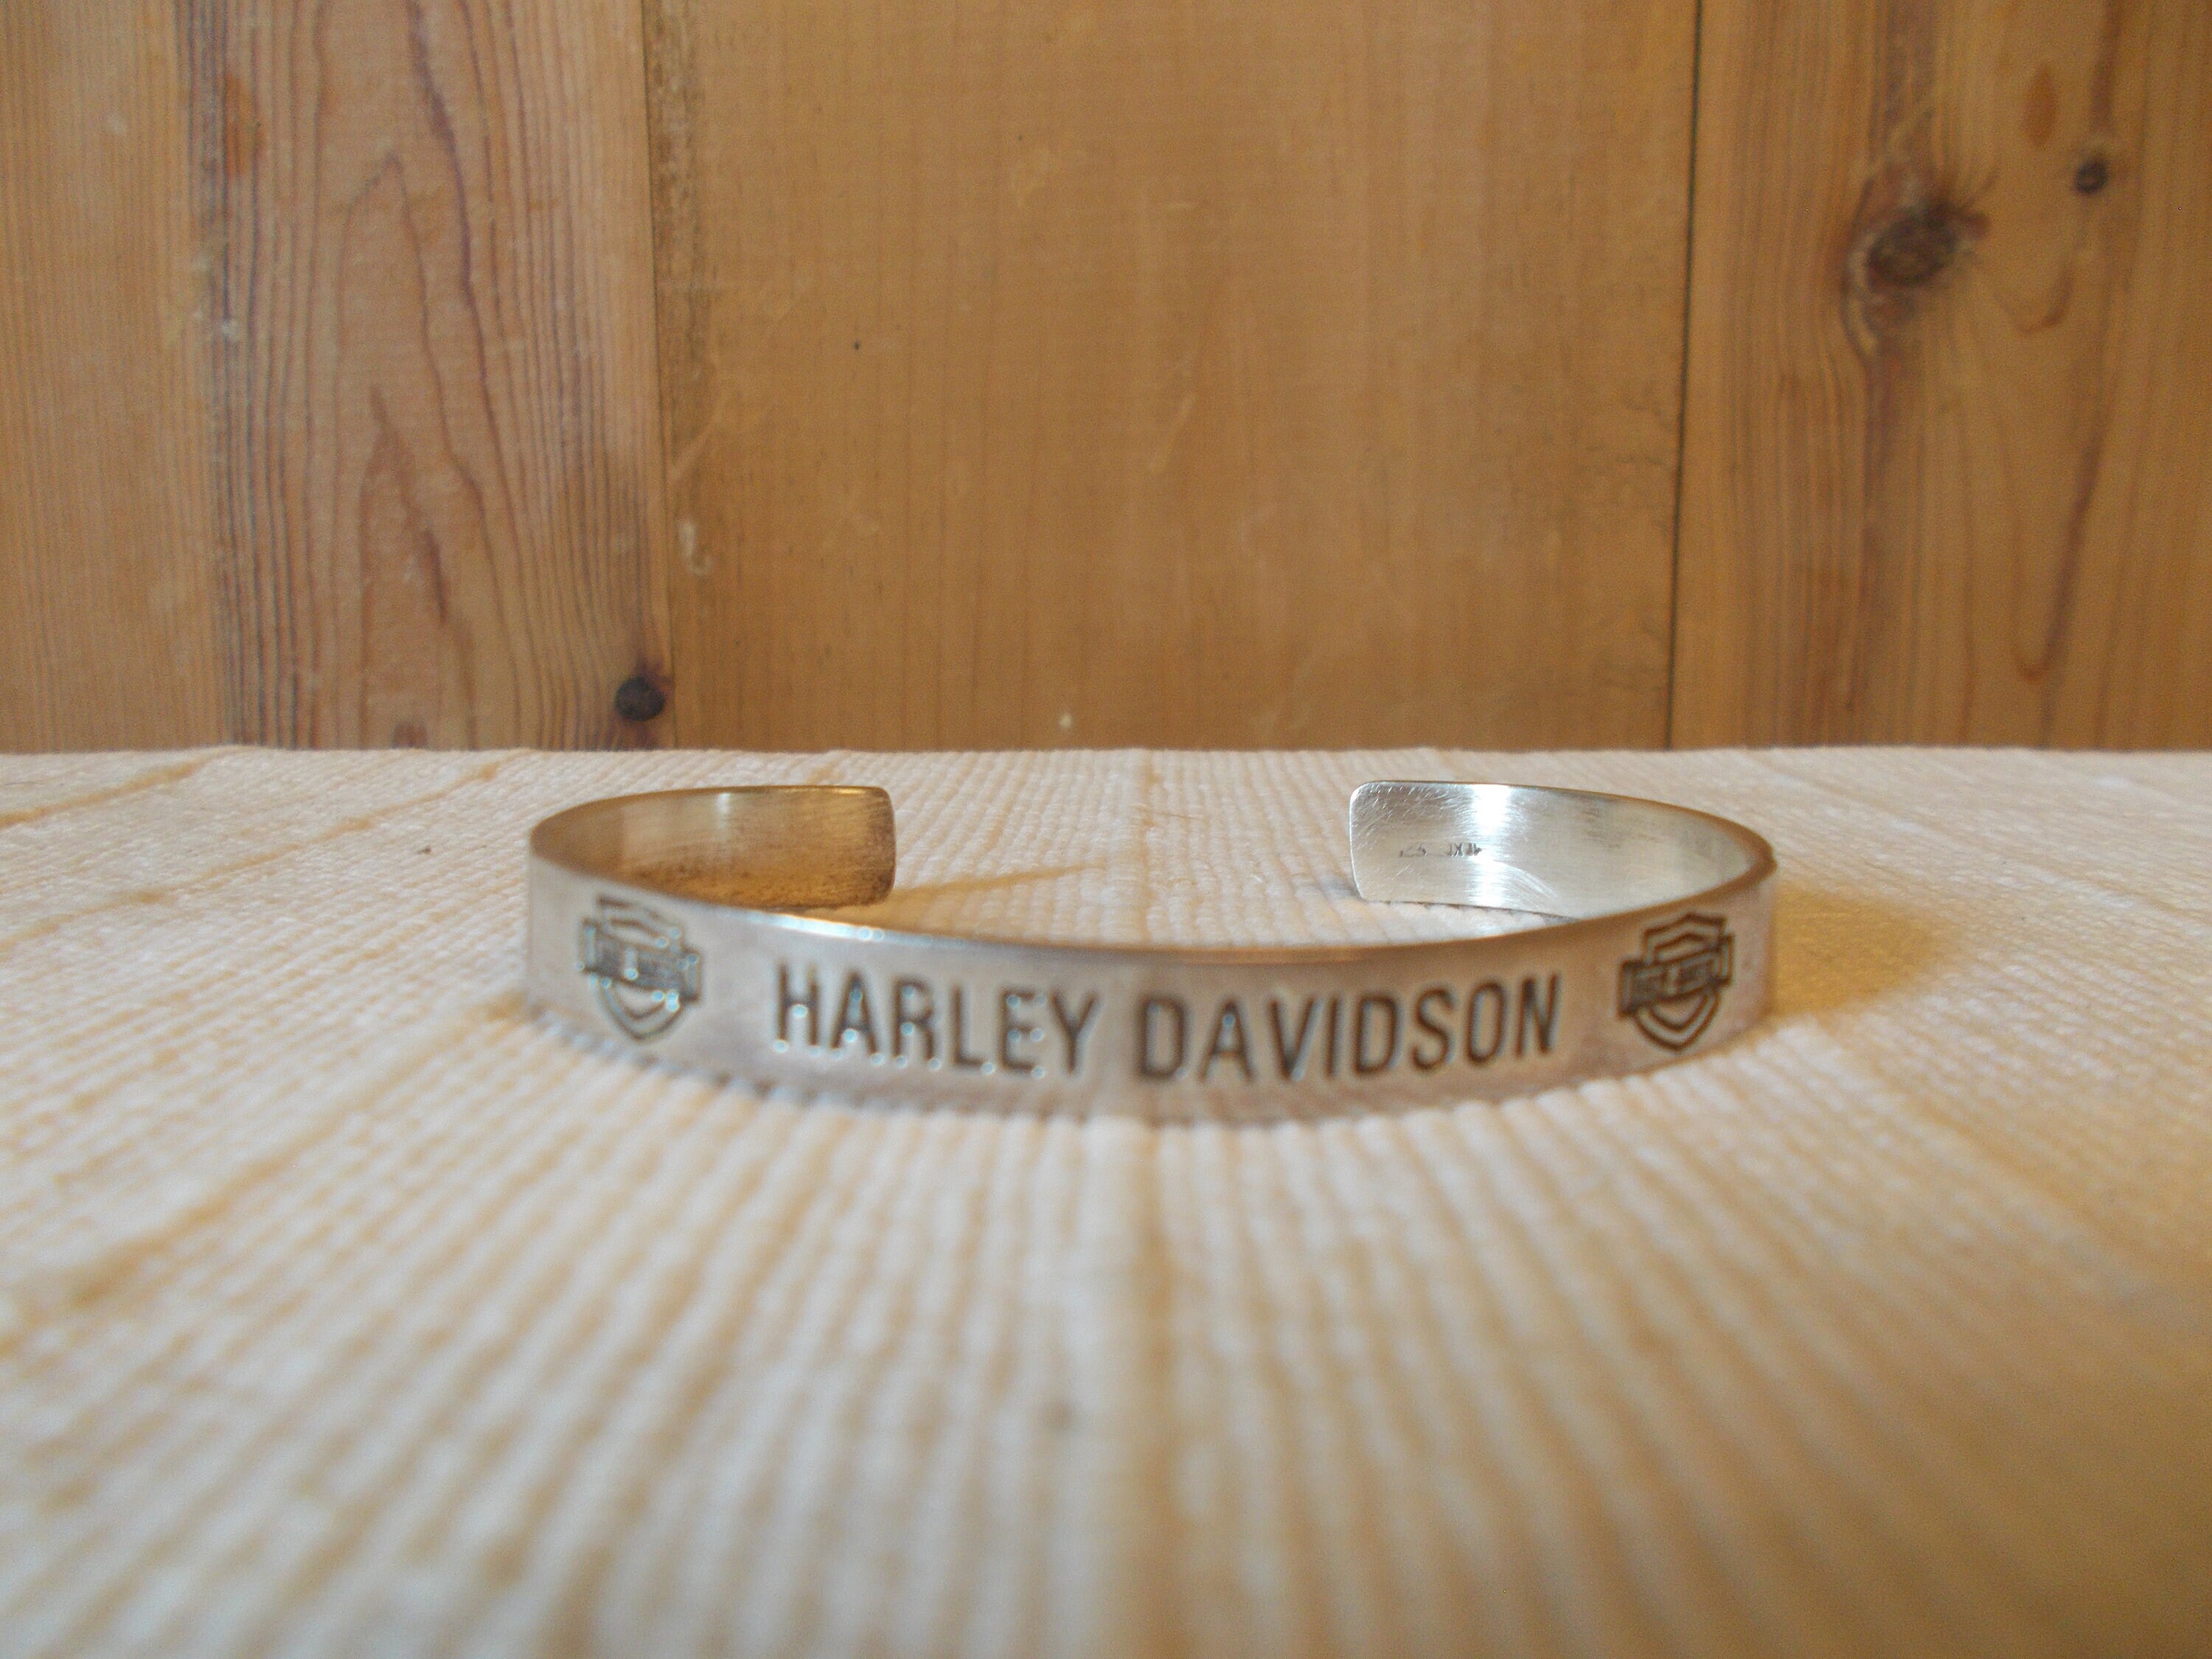 HARLEY DAVIDSON HARLEY-DAVIDSON BRACELETS WRISTBANDS JEWELRY MERCHANDISE  MOTORCYCLE RACING